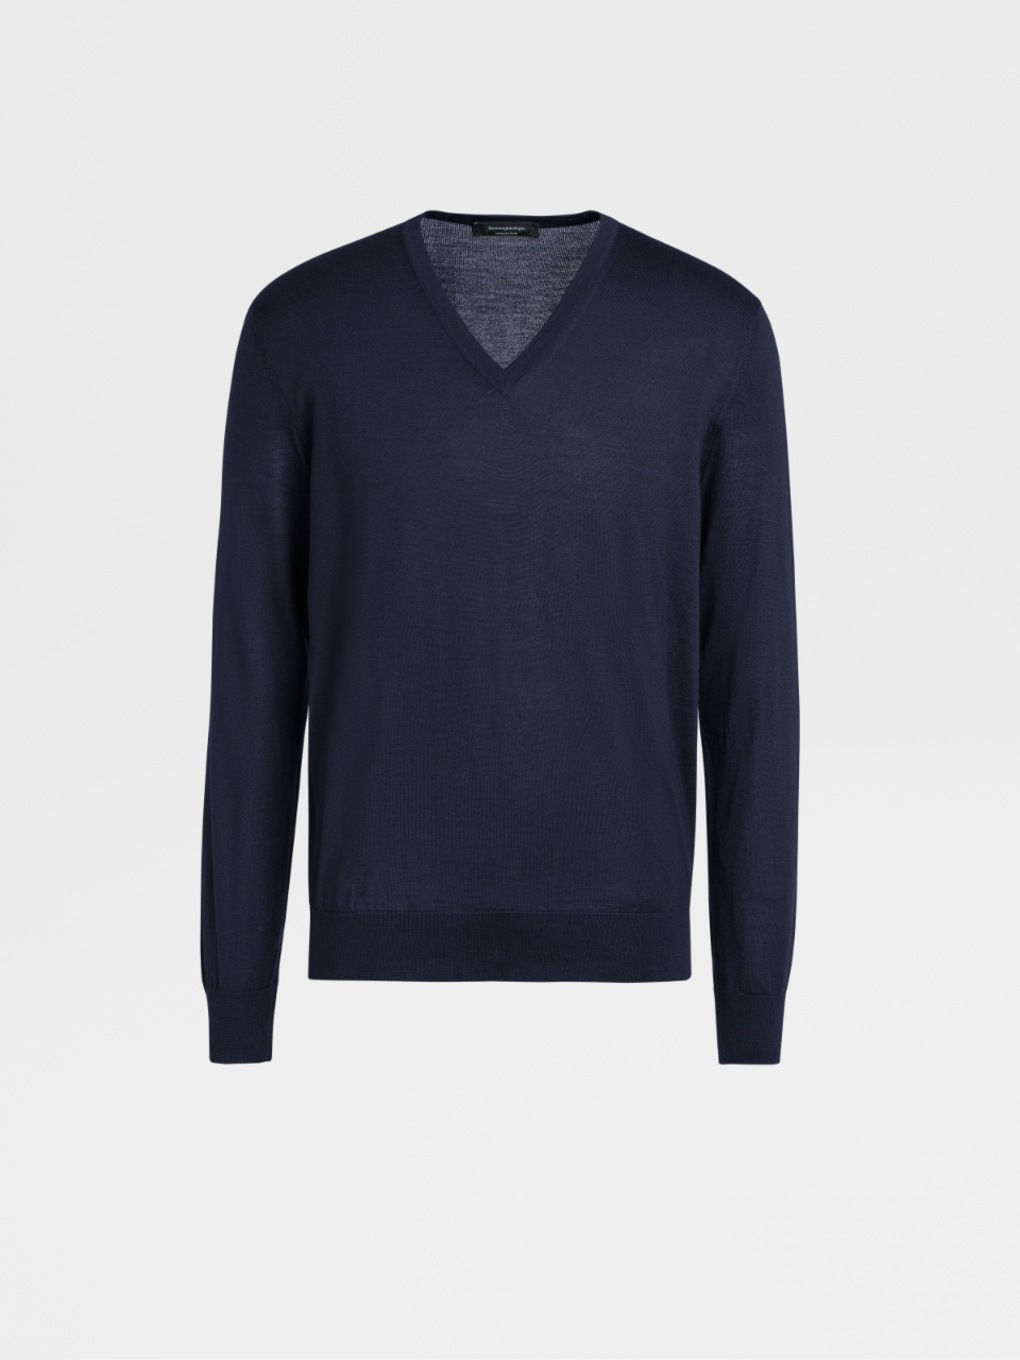 Navy Blue XL MEN FASHION Jumpers & Sweatshirts Basic Primark cardigan discount 78% 